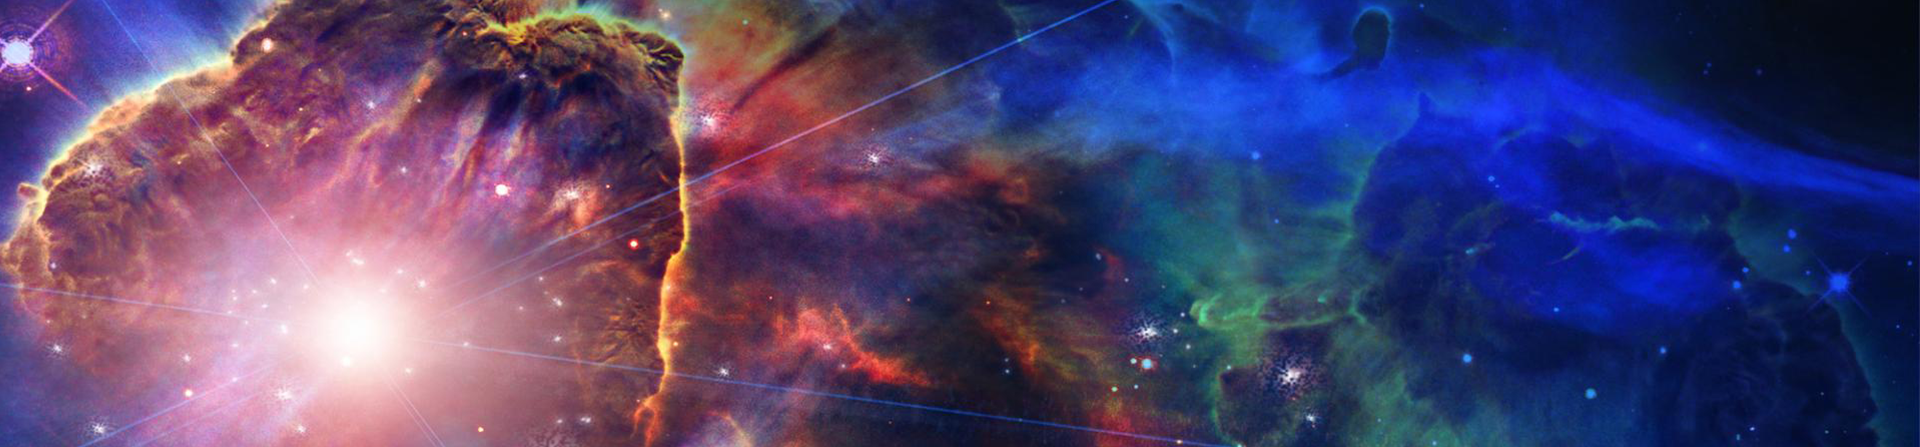 Deep Space Image, courtesy of NASA